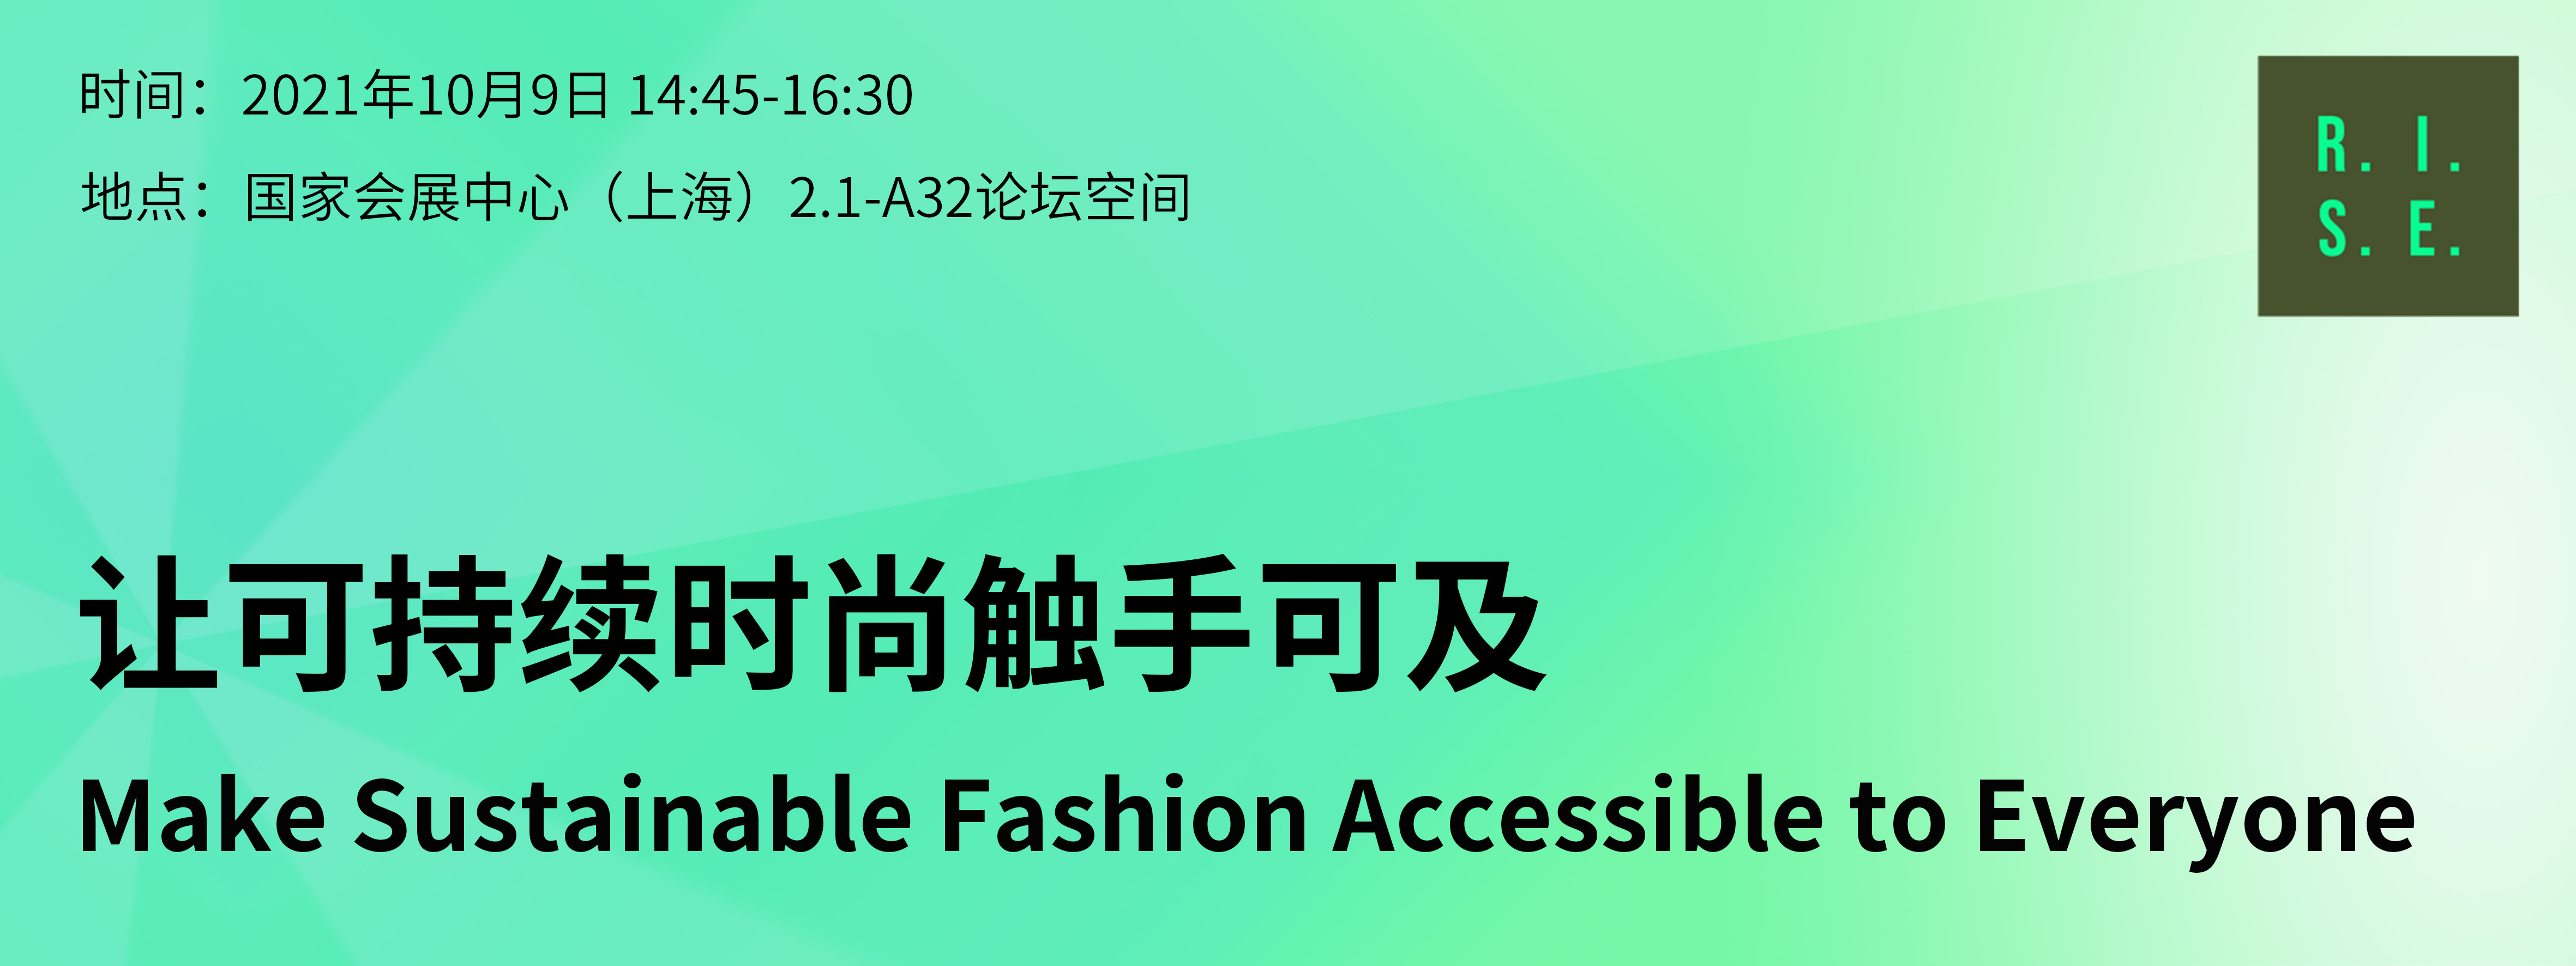 Sustainable-Fashion-Forum